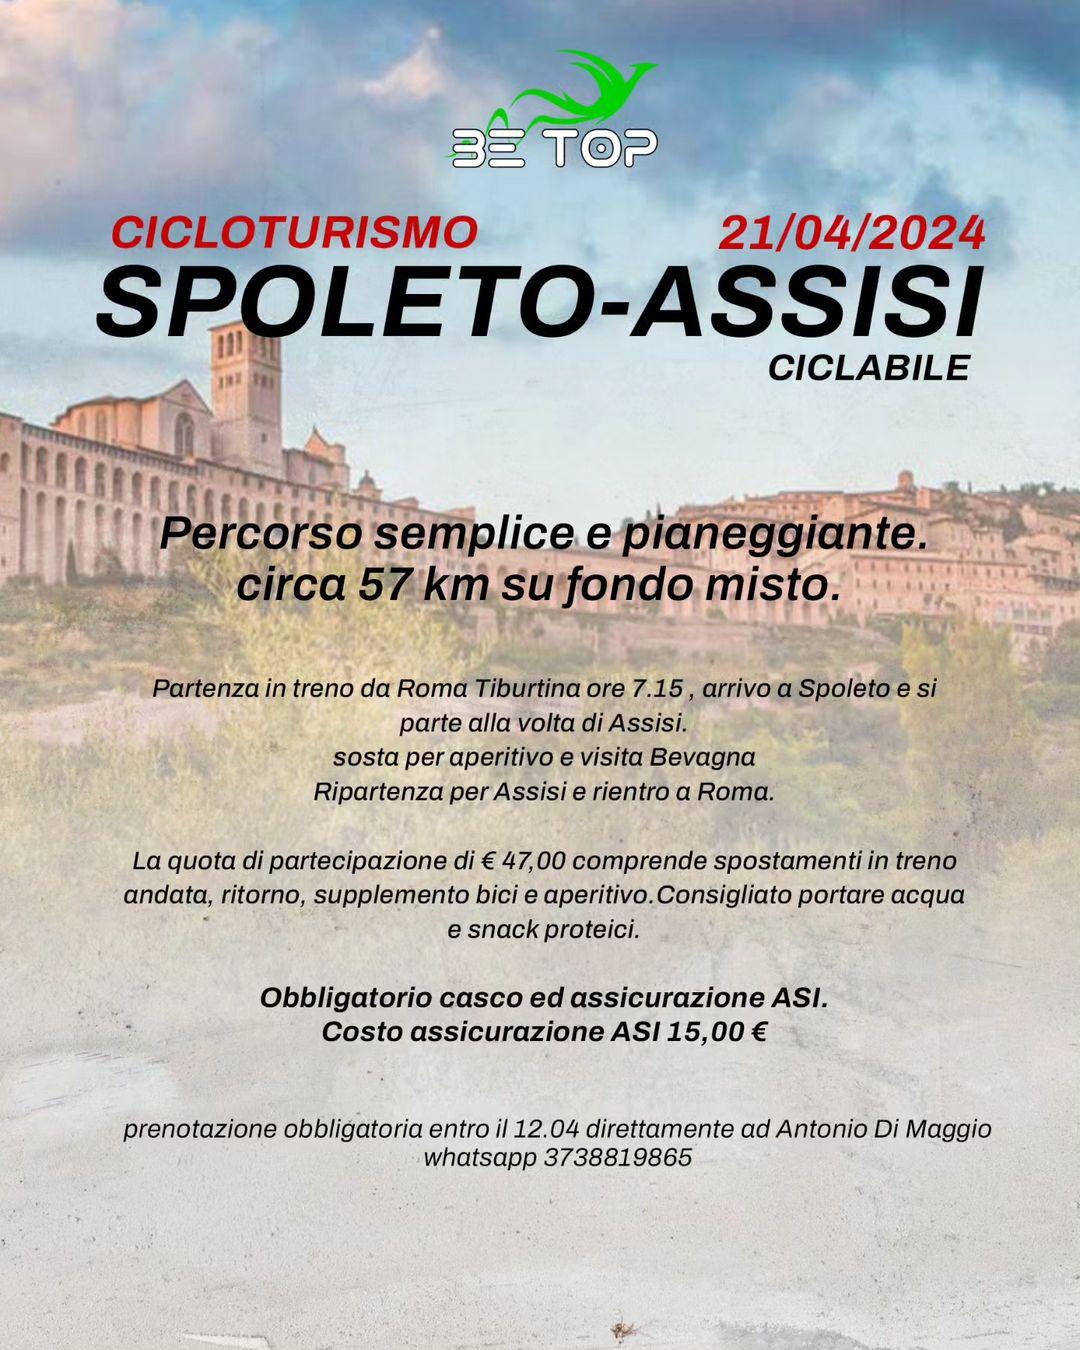 Ciclabile Spoleto-Assisi 21/04/2024